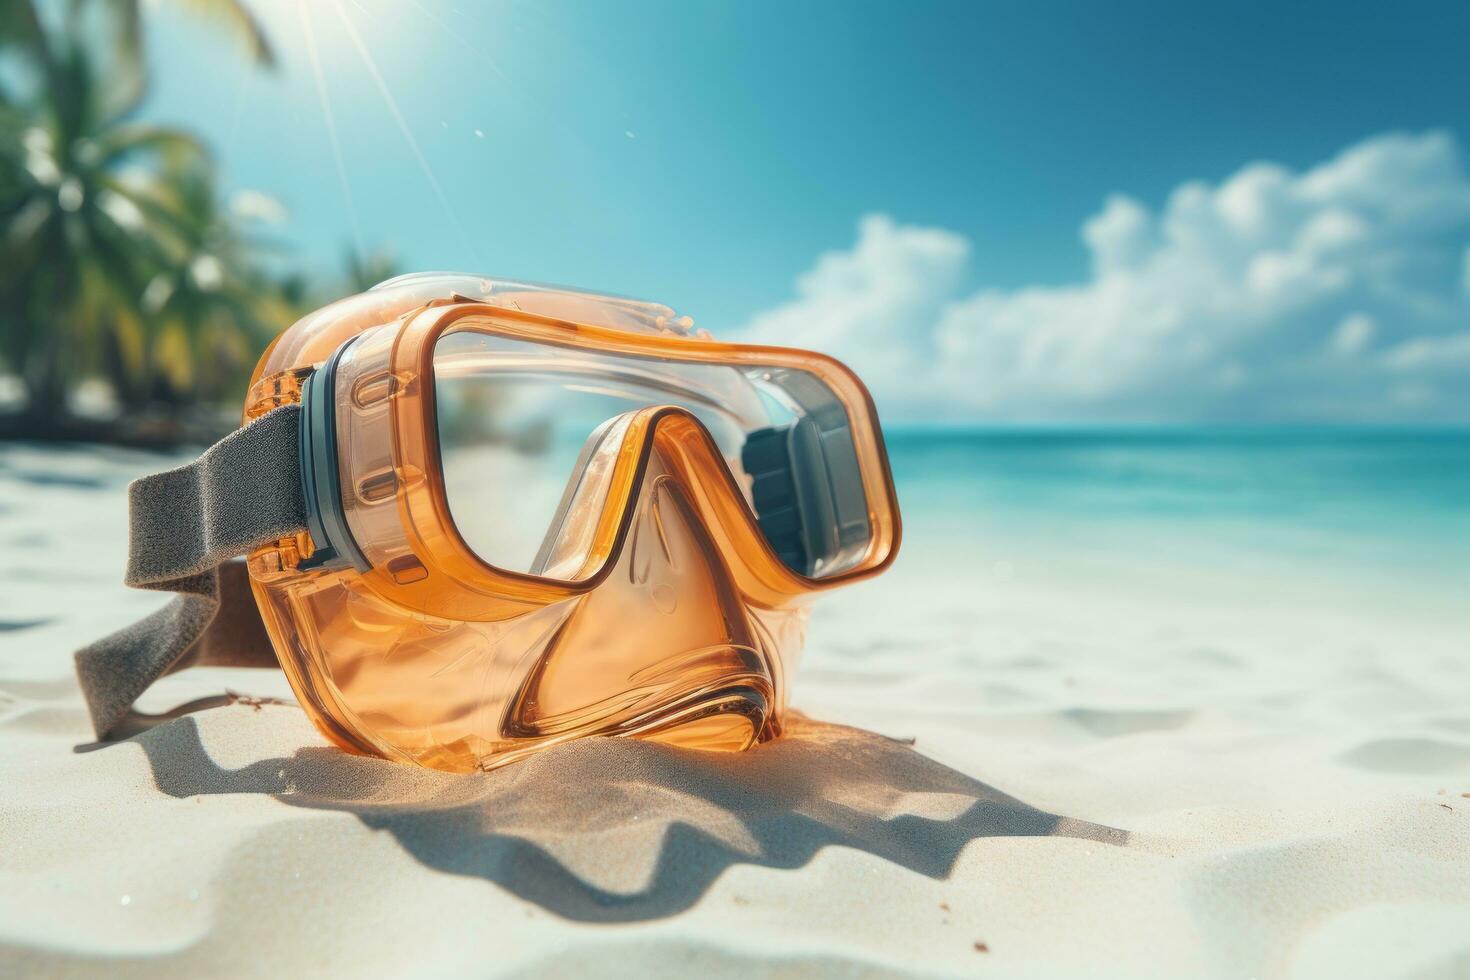 Scuba diving mask on a sandy island against blue ocean photo